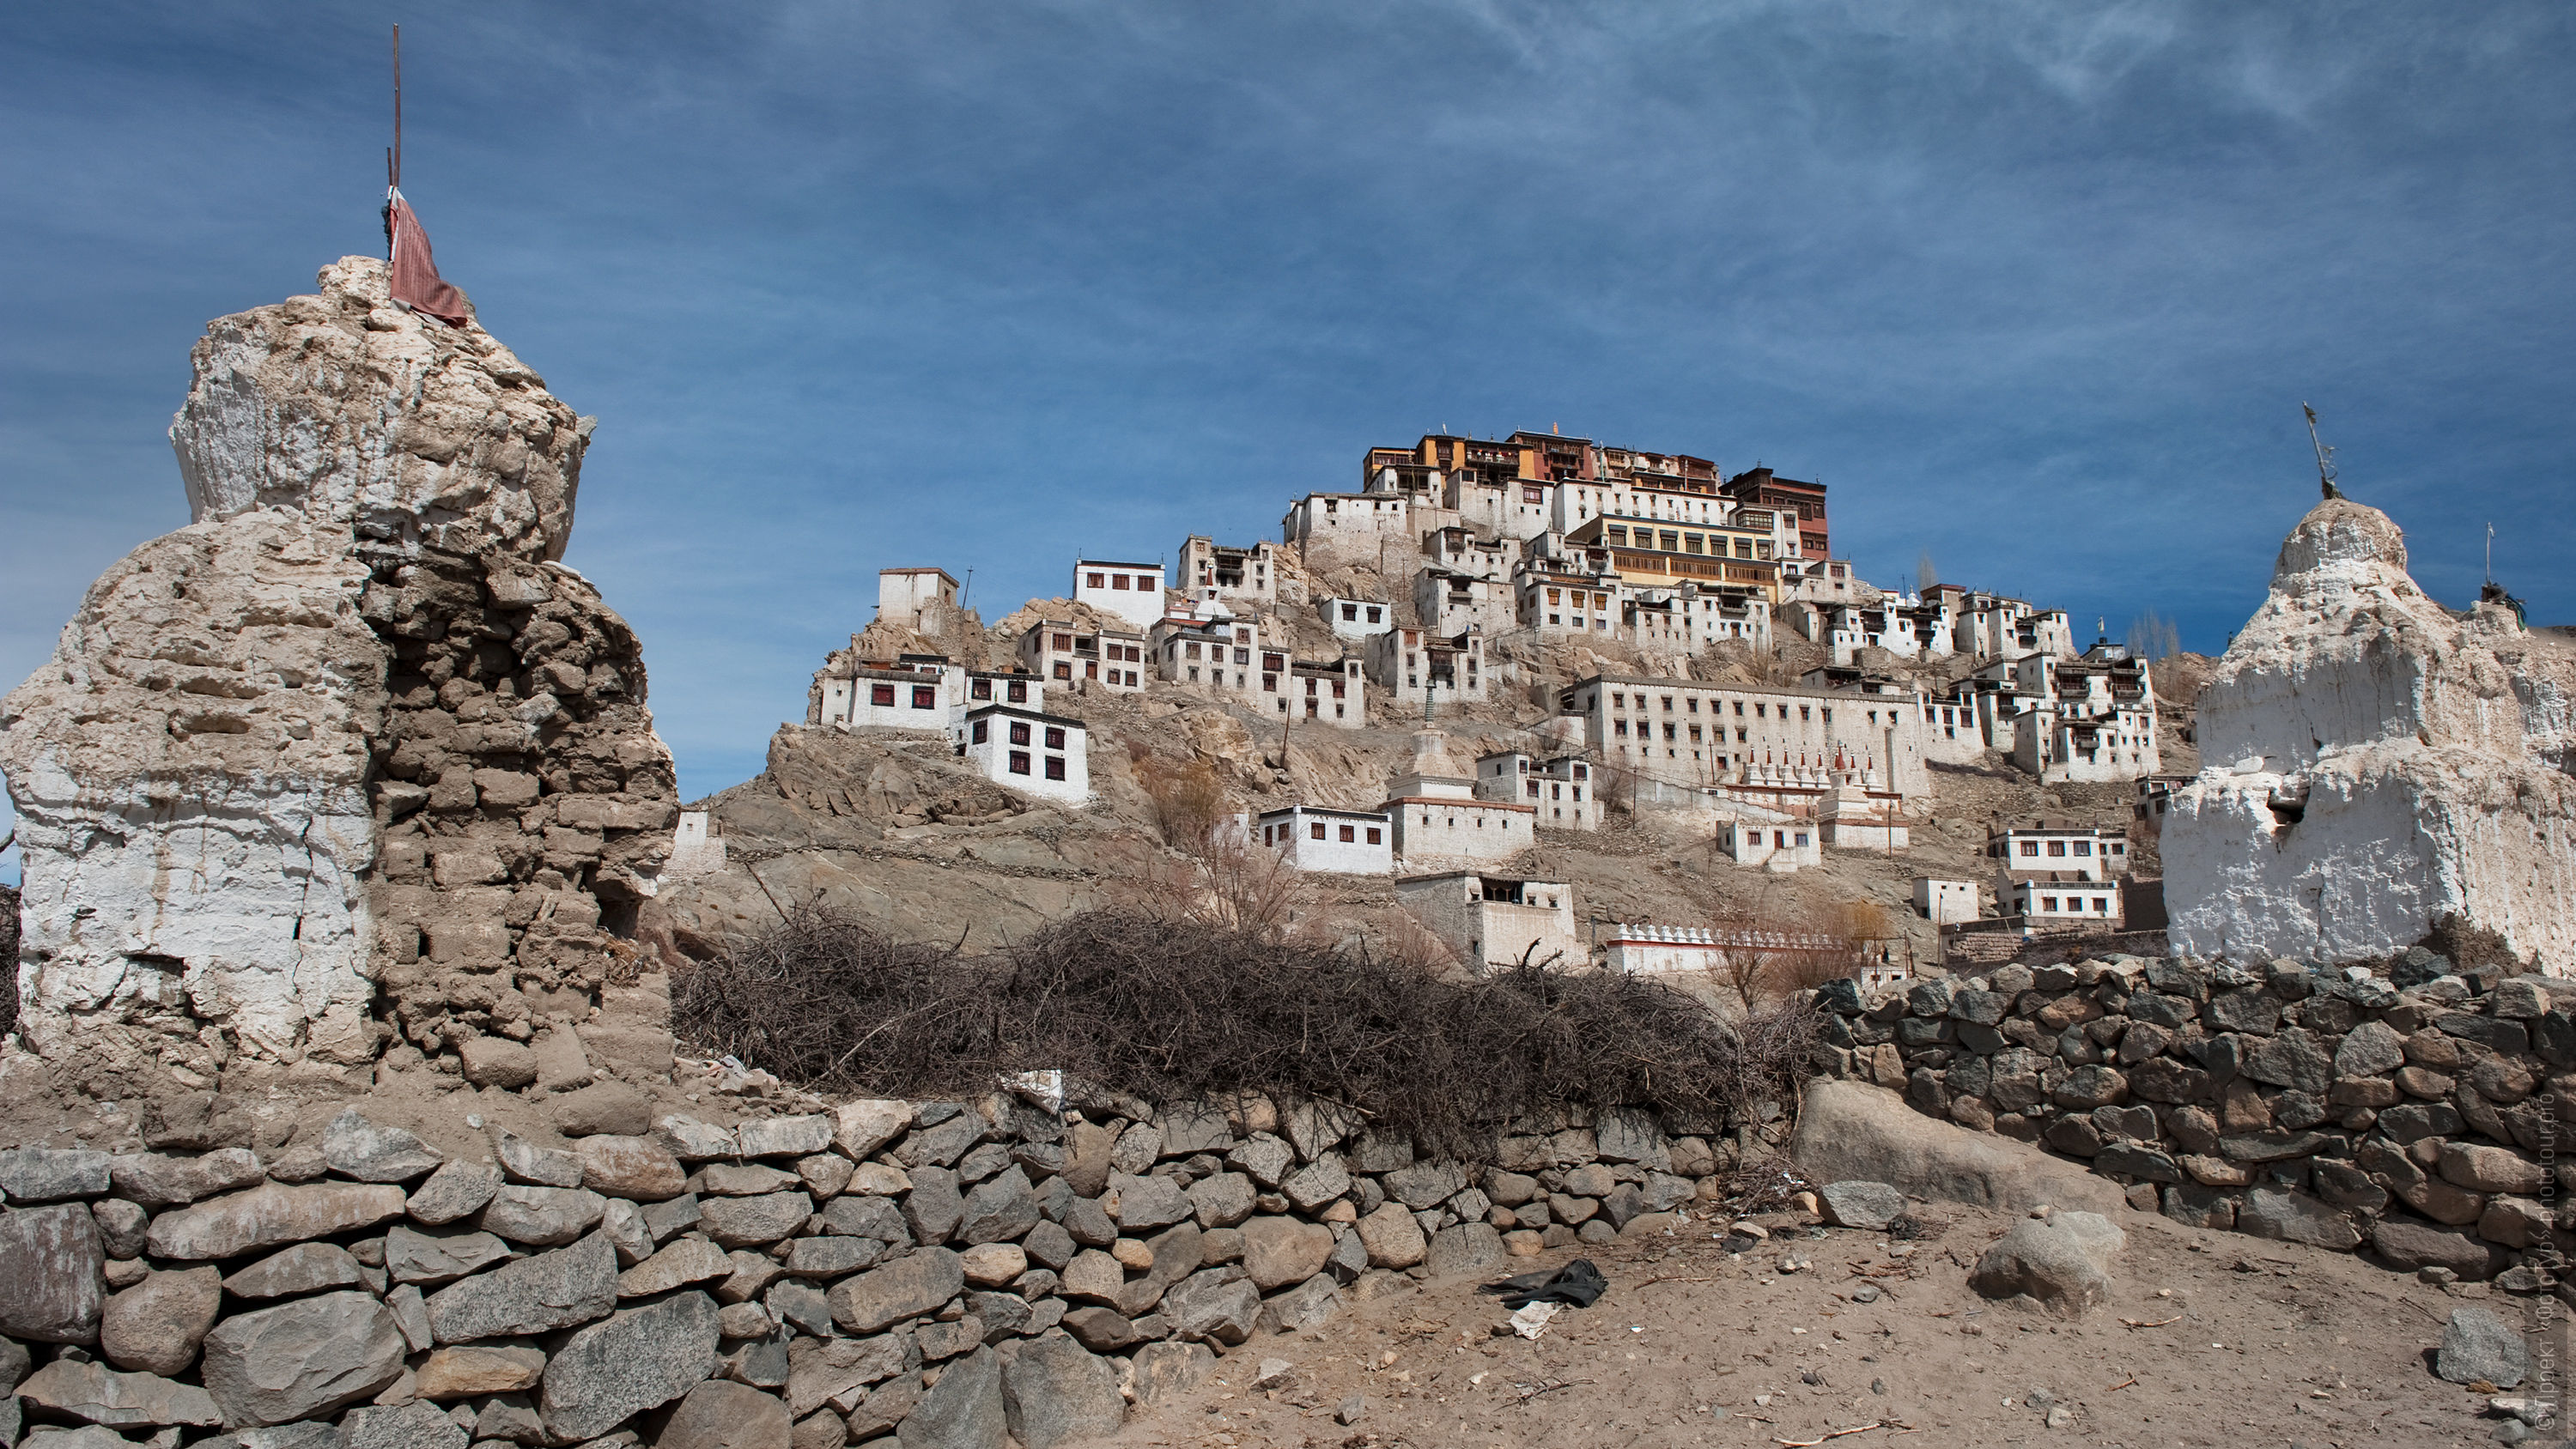 Buddhist monastery Tiksi and white stupas, ladakh womens tour, August 31 - September 14, 2019.